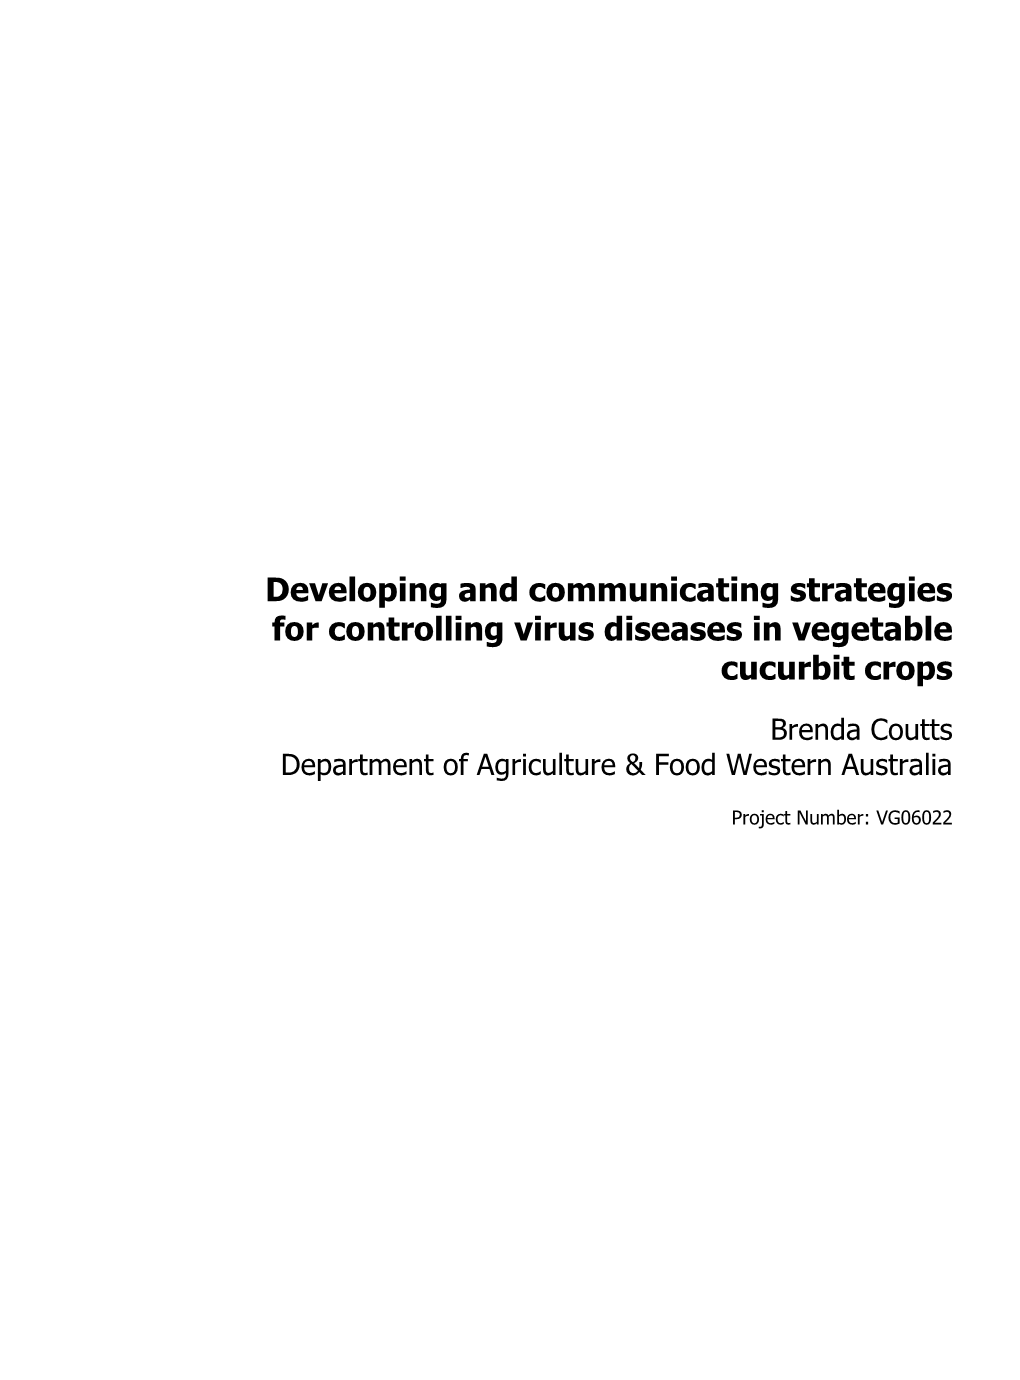 Developing and Communicating Strategies for Controlling Virus Diseases in Vegetable Cucurbit Crops